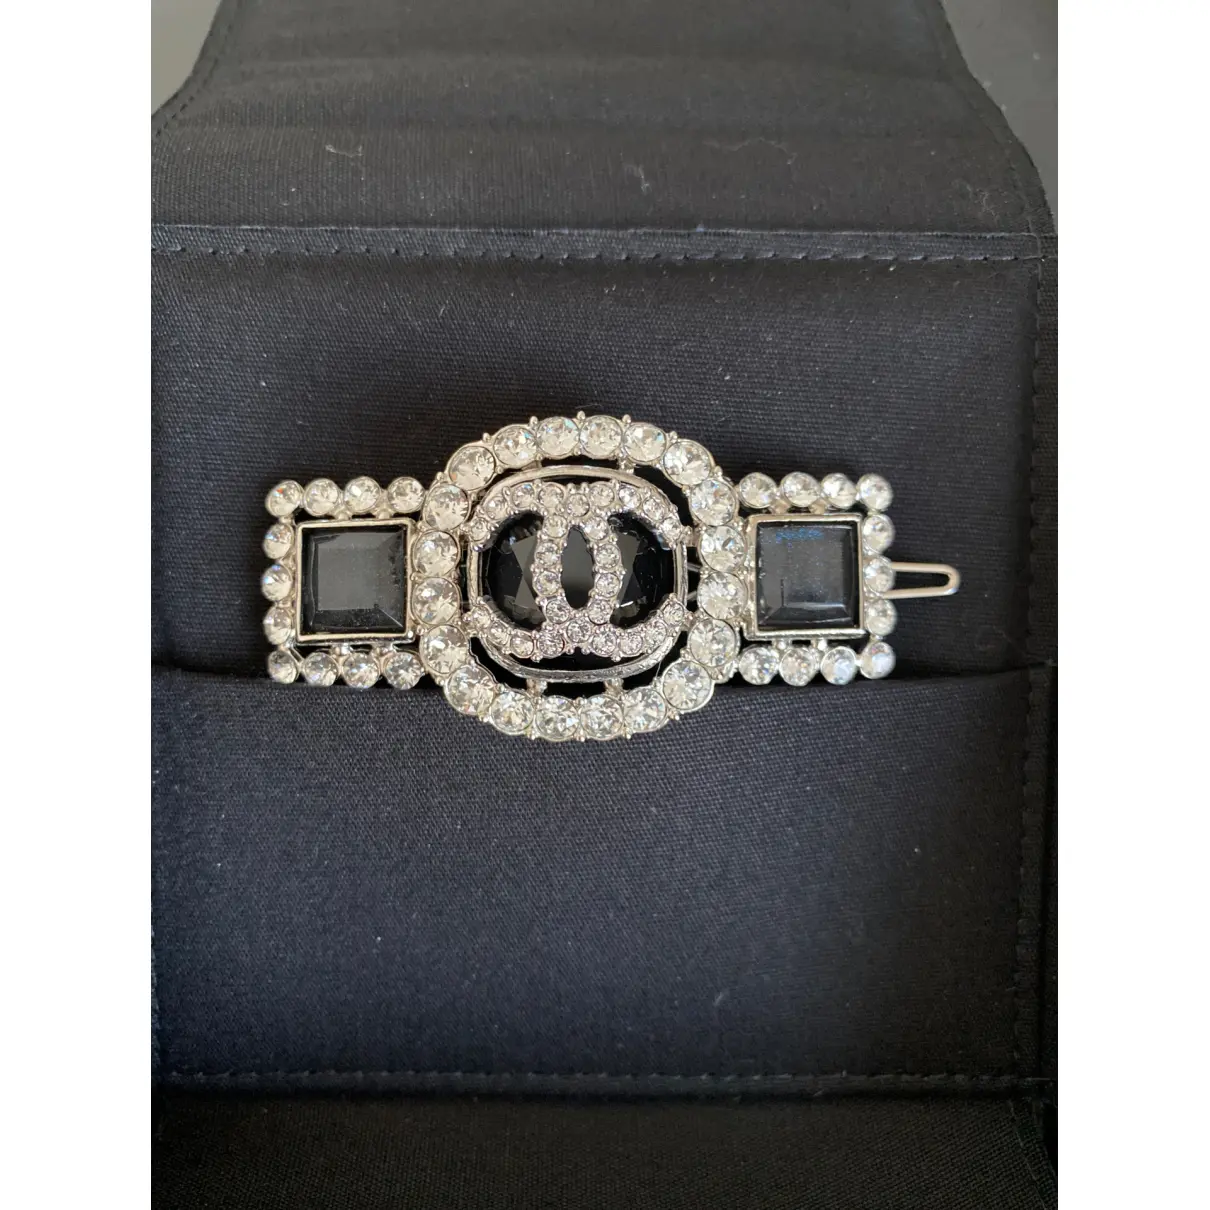 Buy Chanel CC crystal hair accessory online